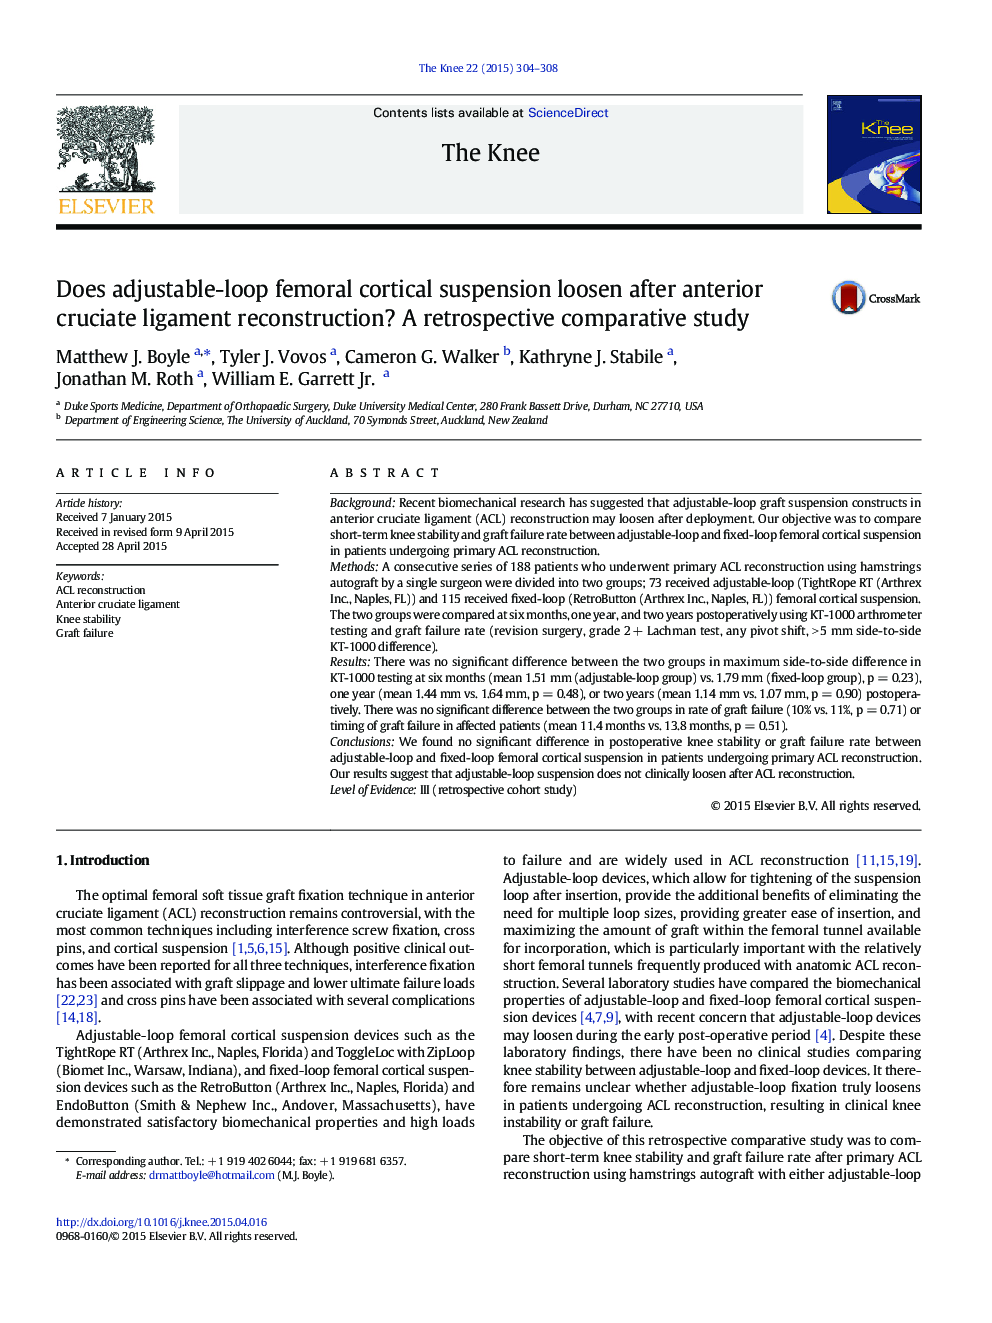 Does adjustable-loop femoral cortical suspension loosen after anterior cruciate ligament reconstruction? A retrospective comparative study